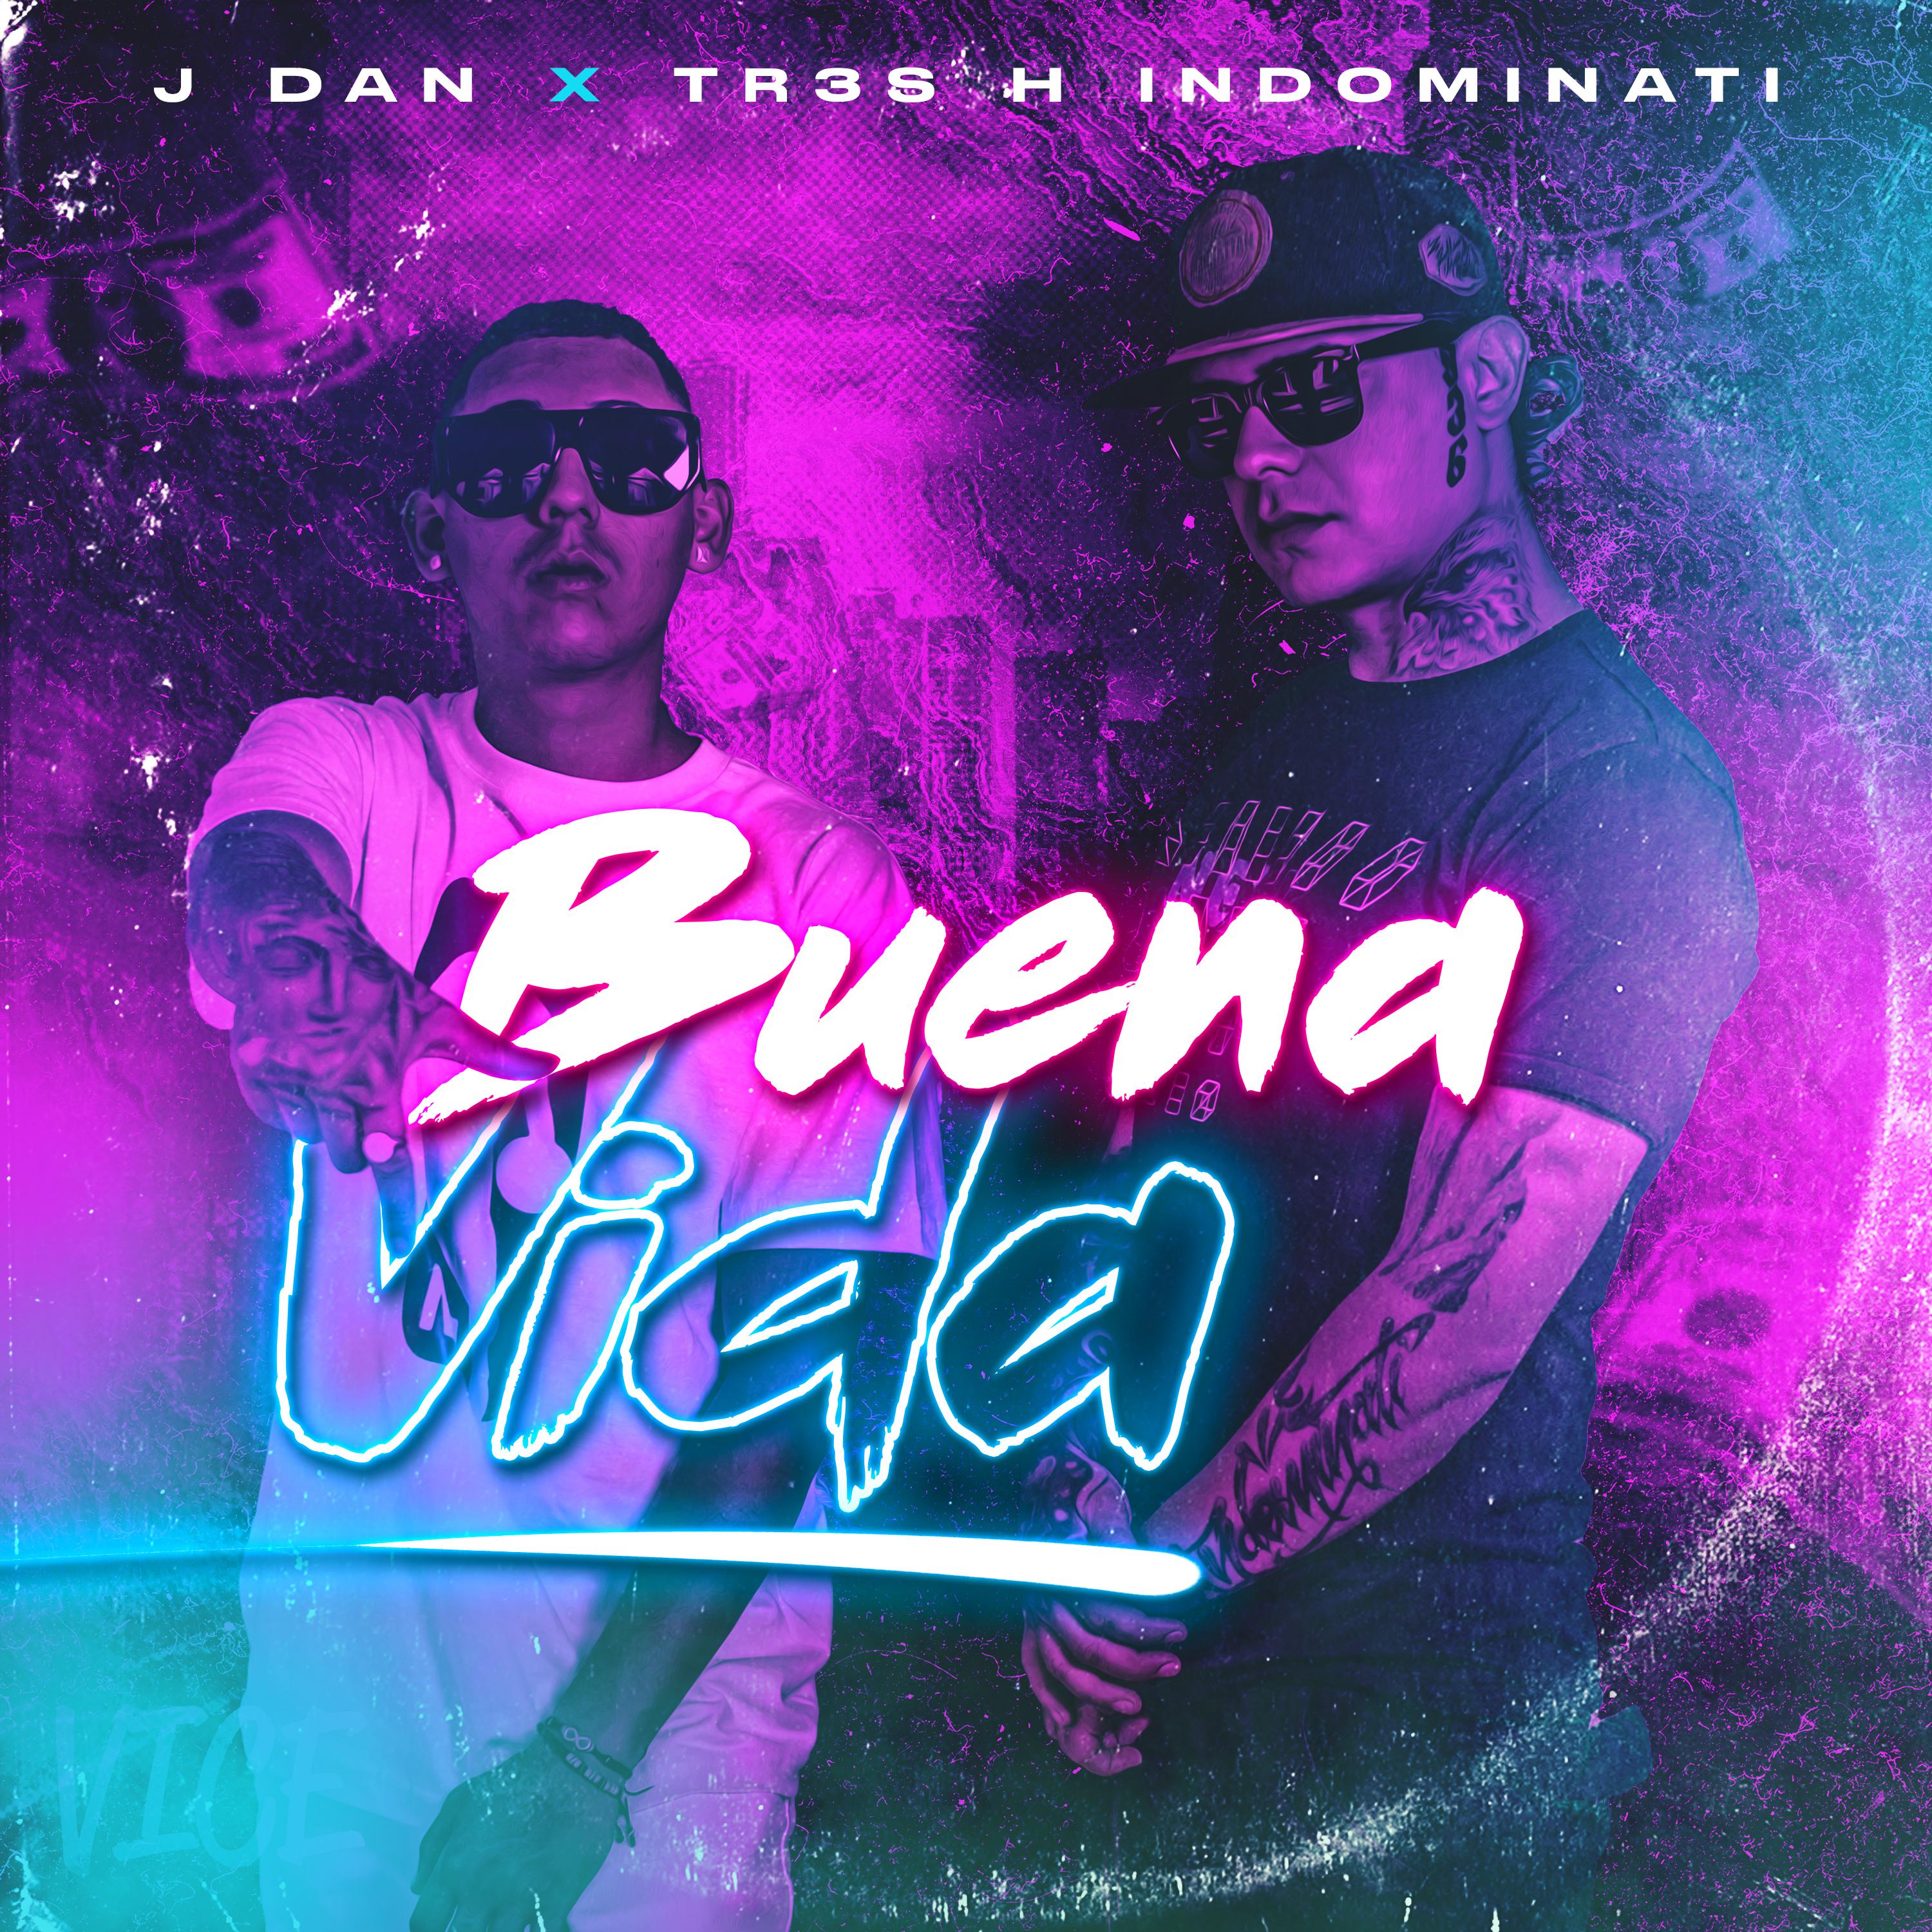 Постер альбома Vida Buena